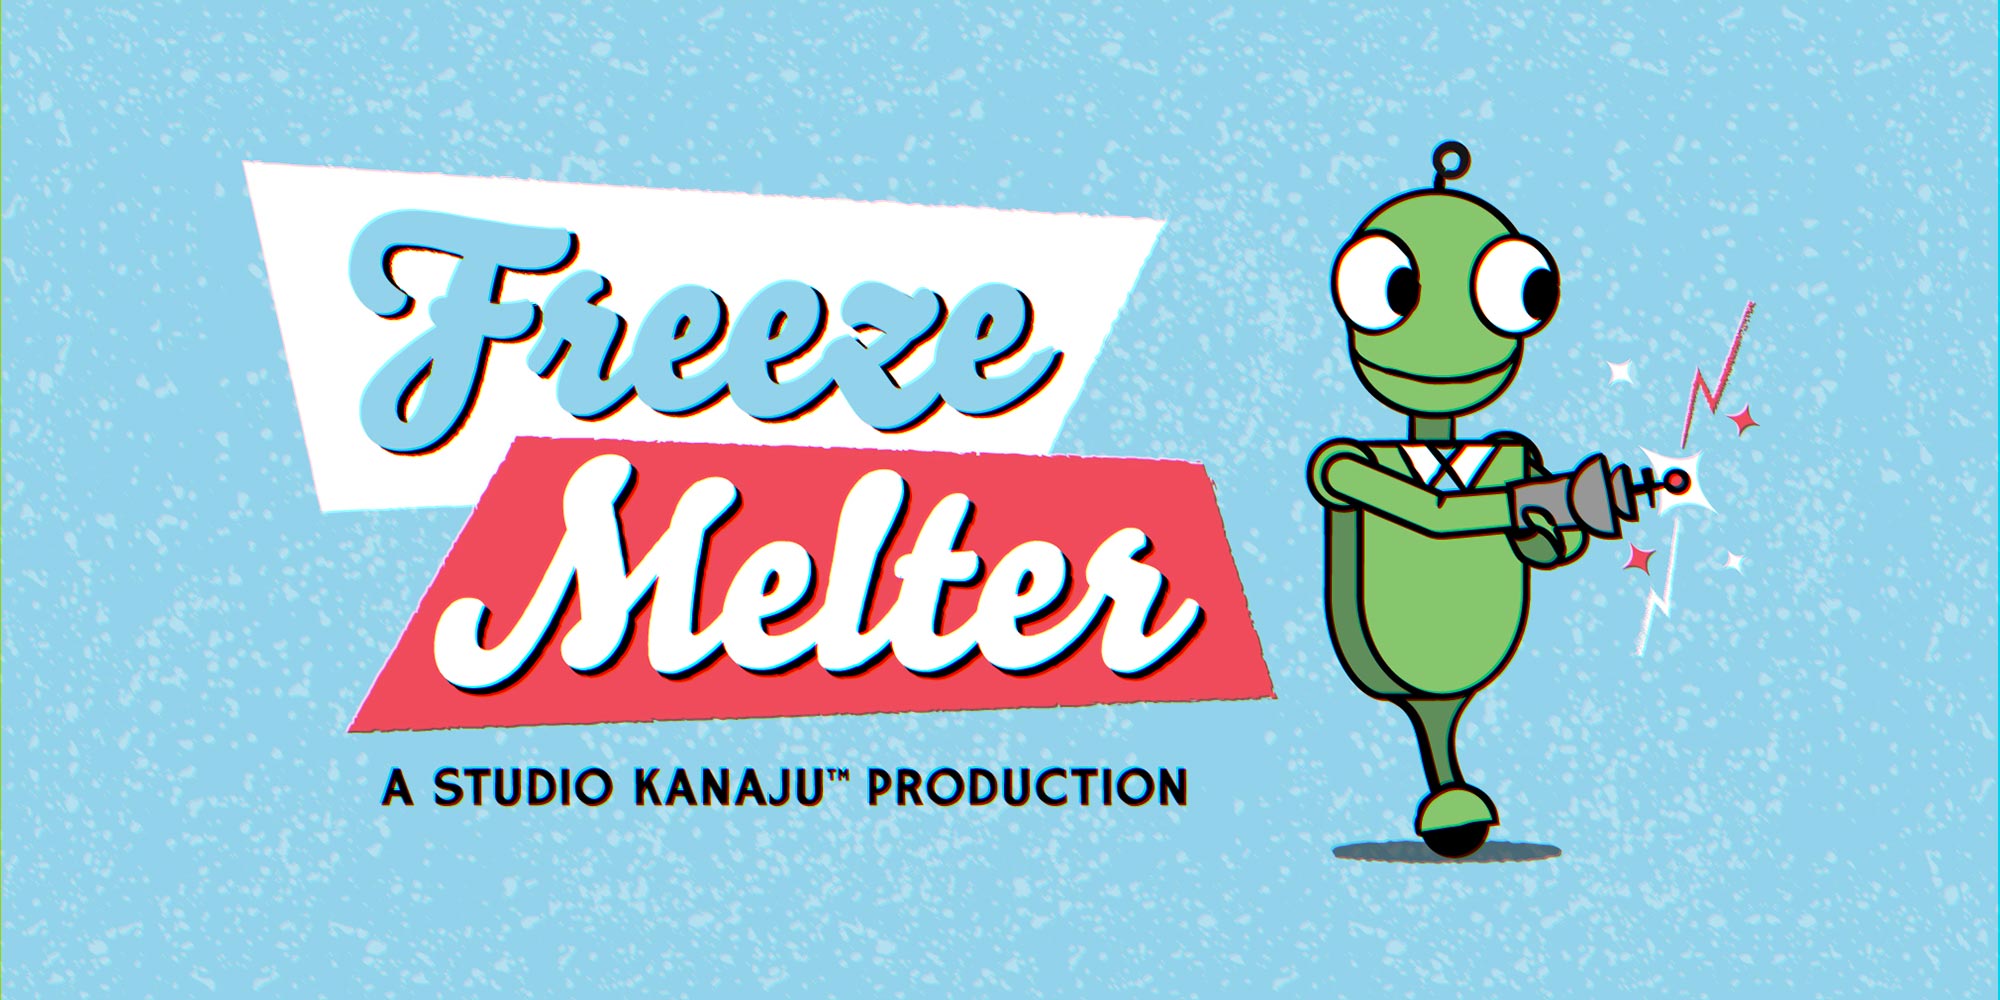 FreezeMelter, A Studio Kanaju Production